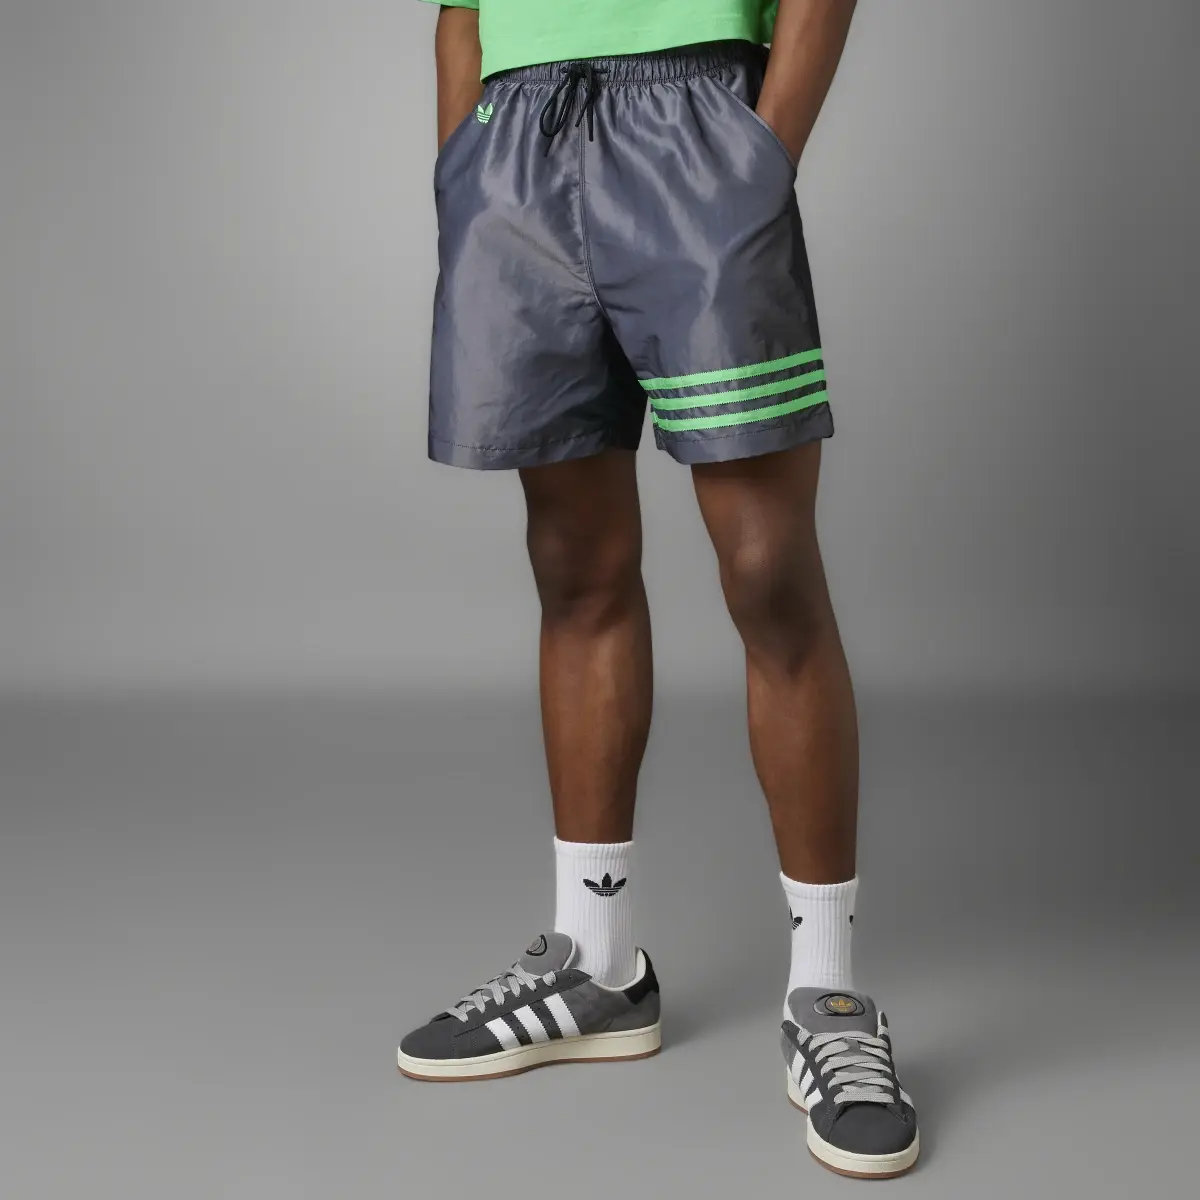 Adidas Adicolor Neuclassics Shorts. 1